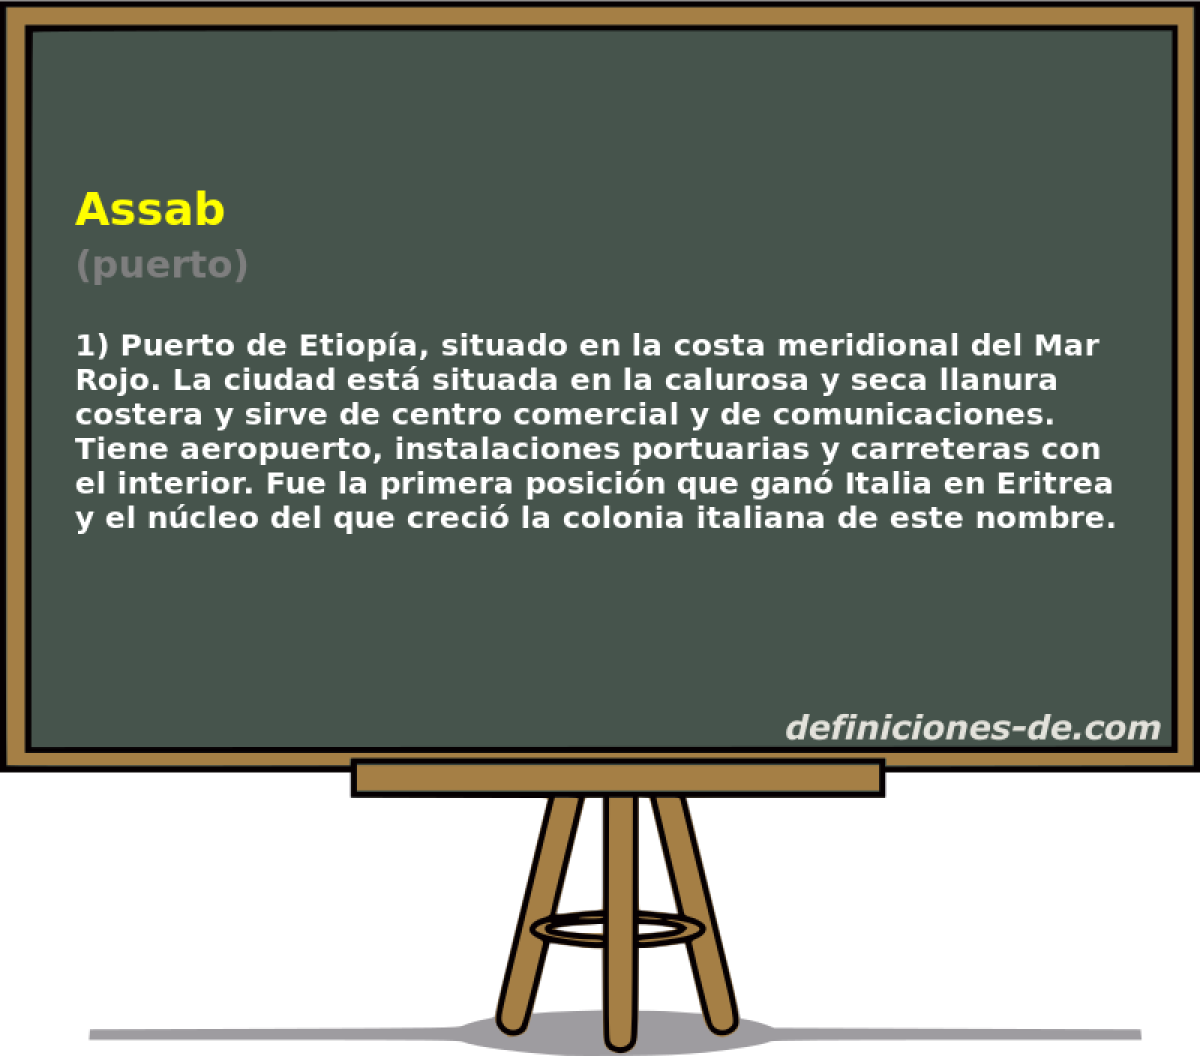 Assab (puerto)